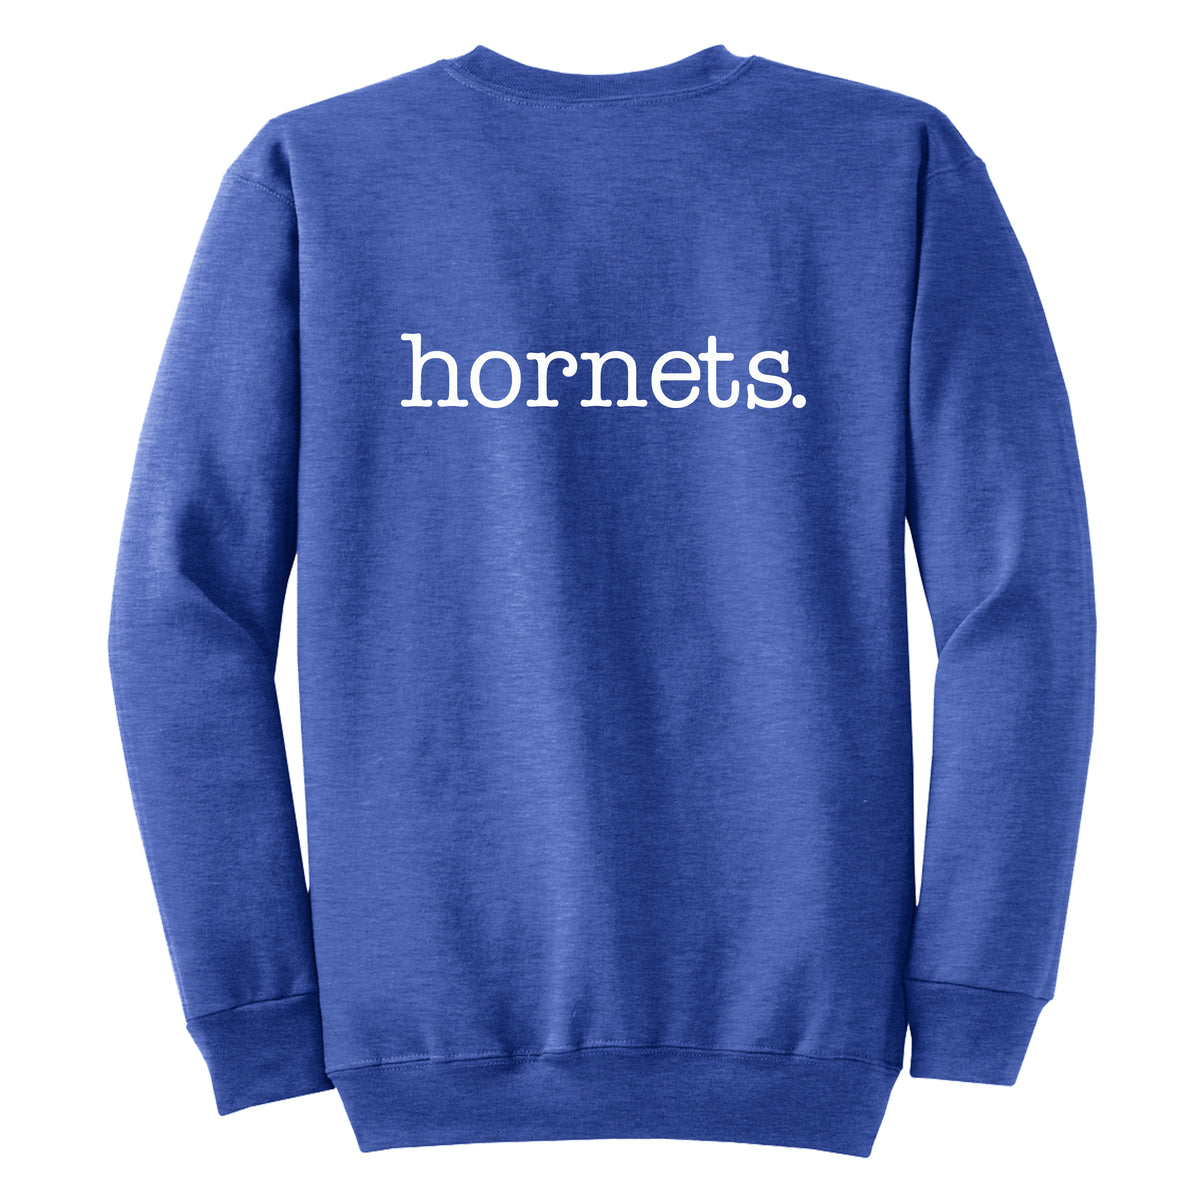 Bryant Hornets. sweatshirt